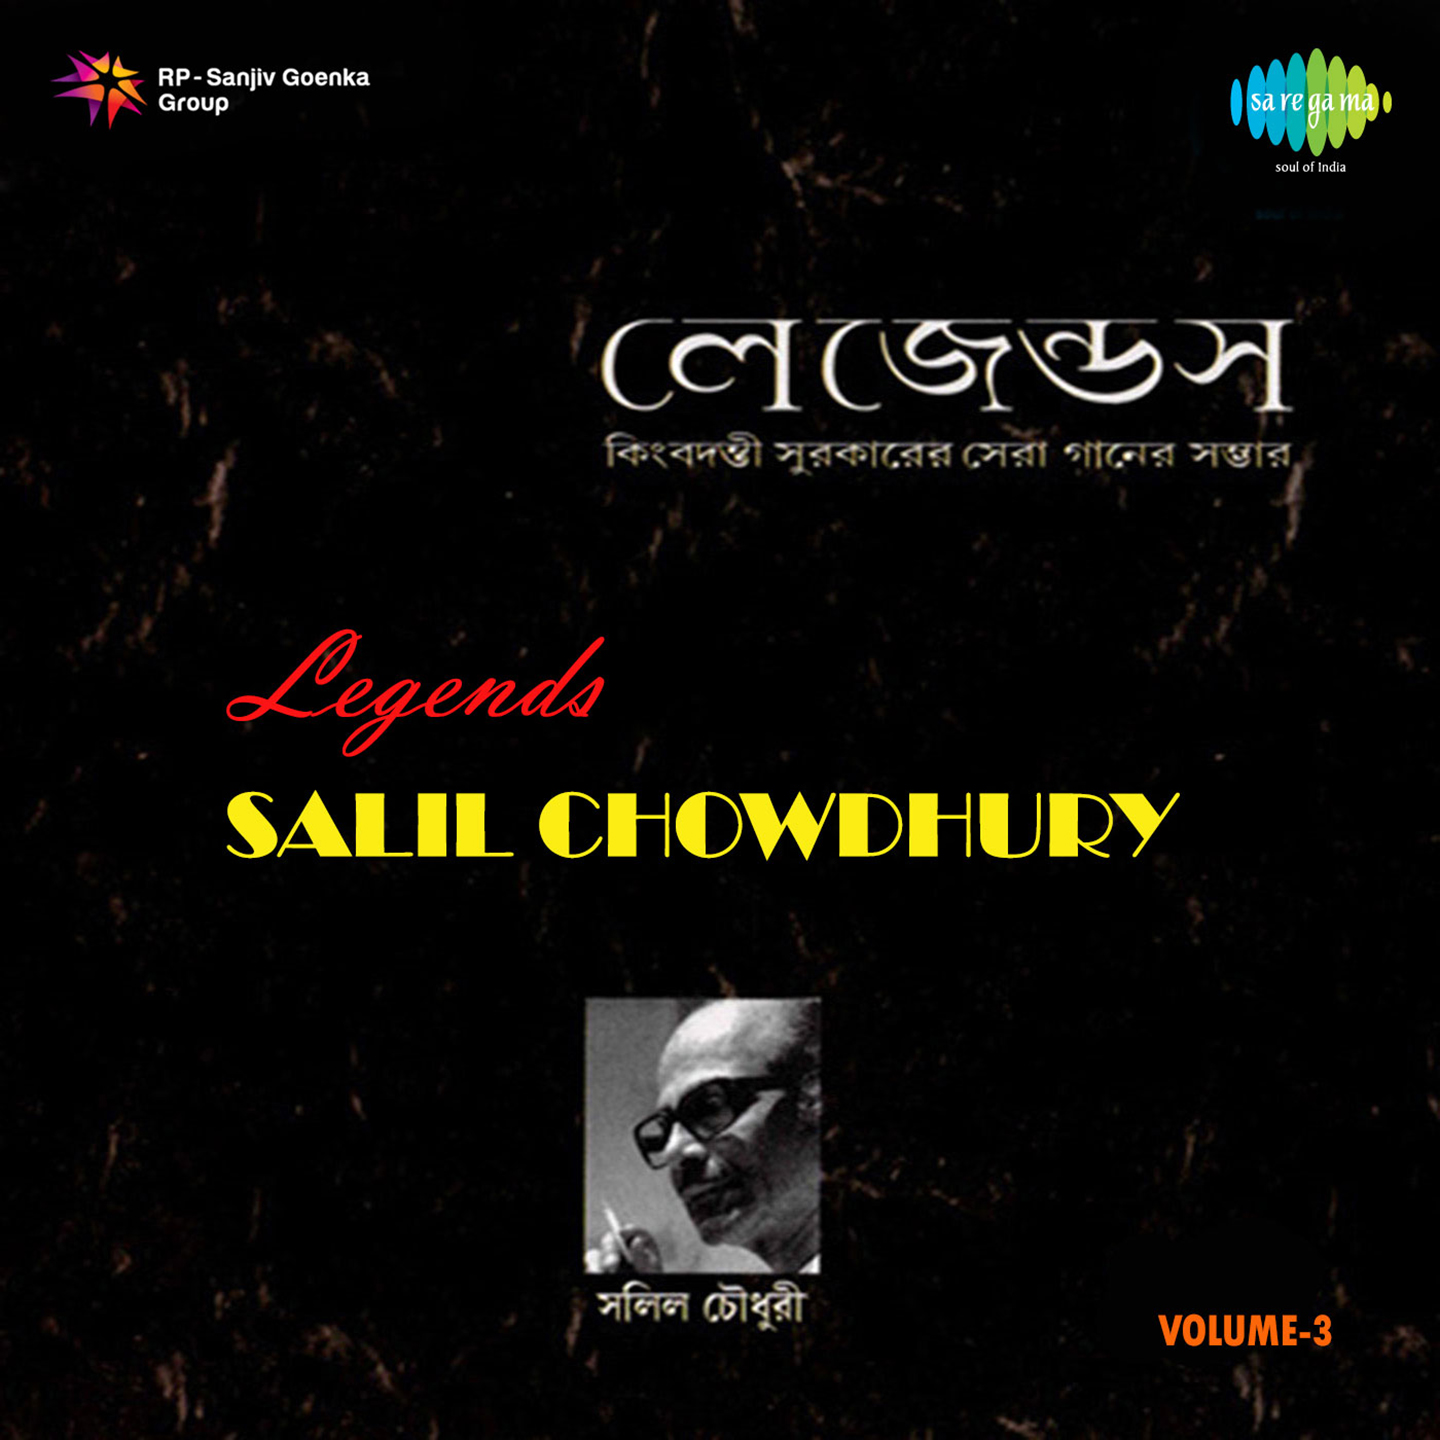 Legends Salil Chowdhury Volume 3